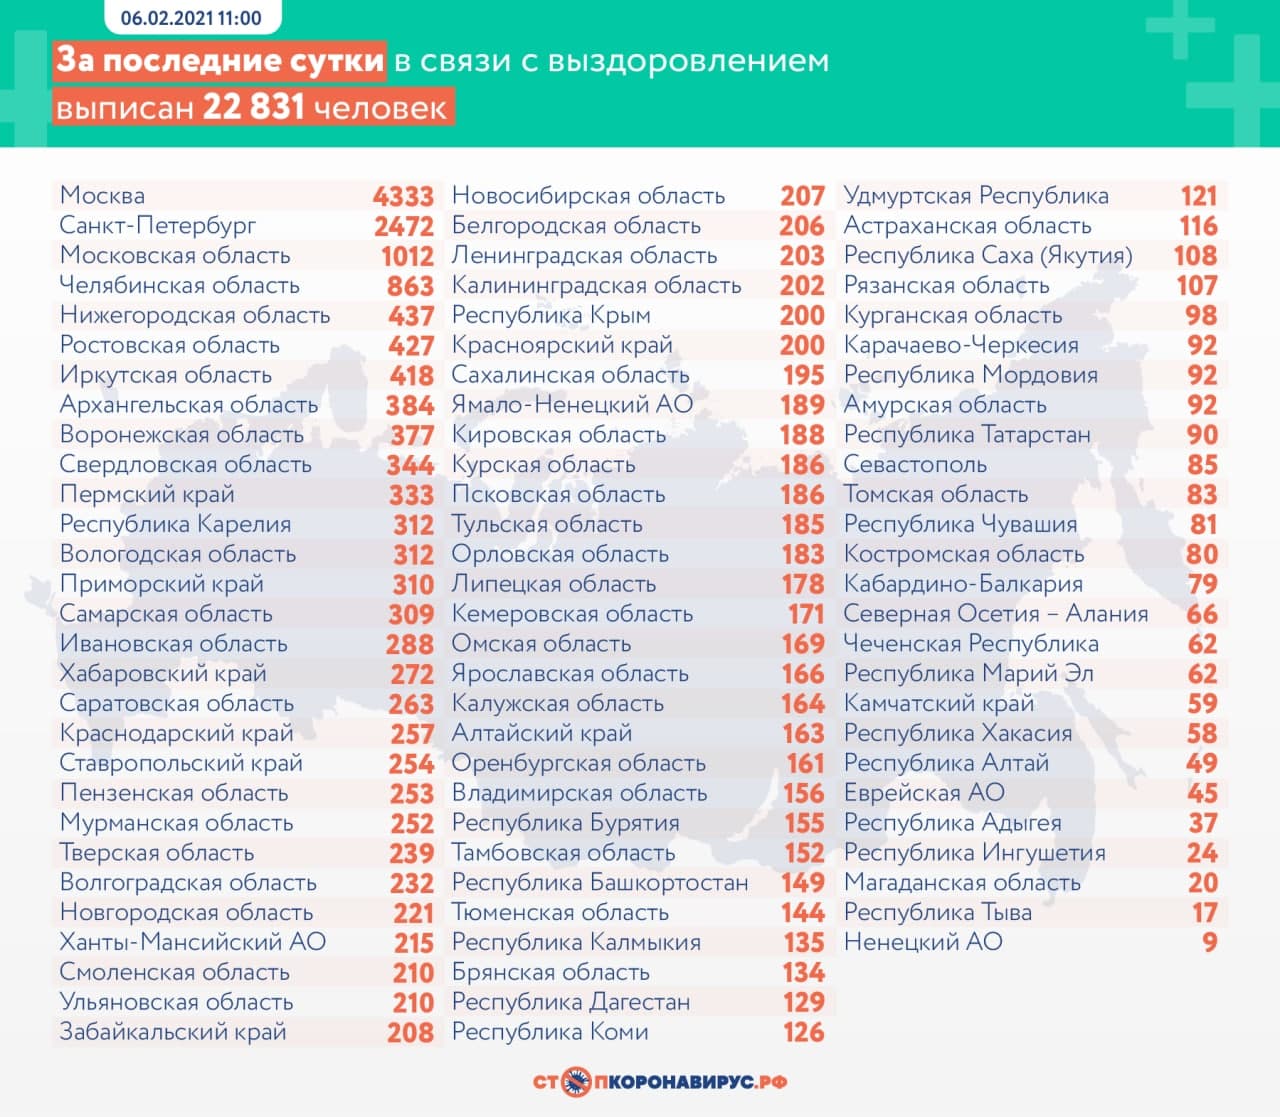 Оперативная статистика по коронавирусу в России на 11 февраля